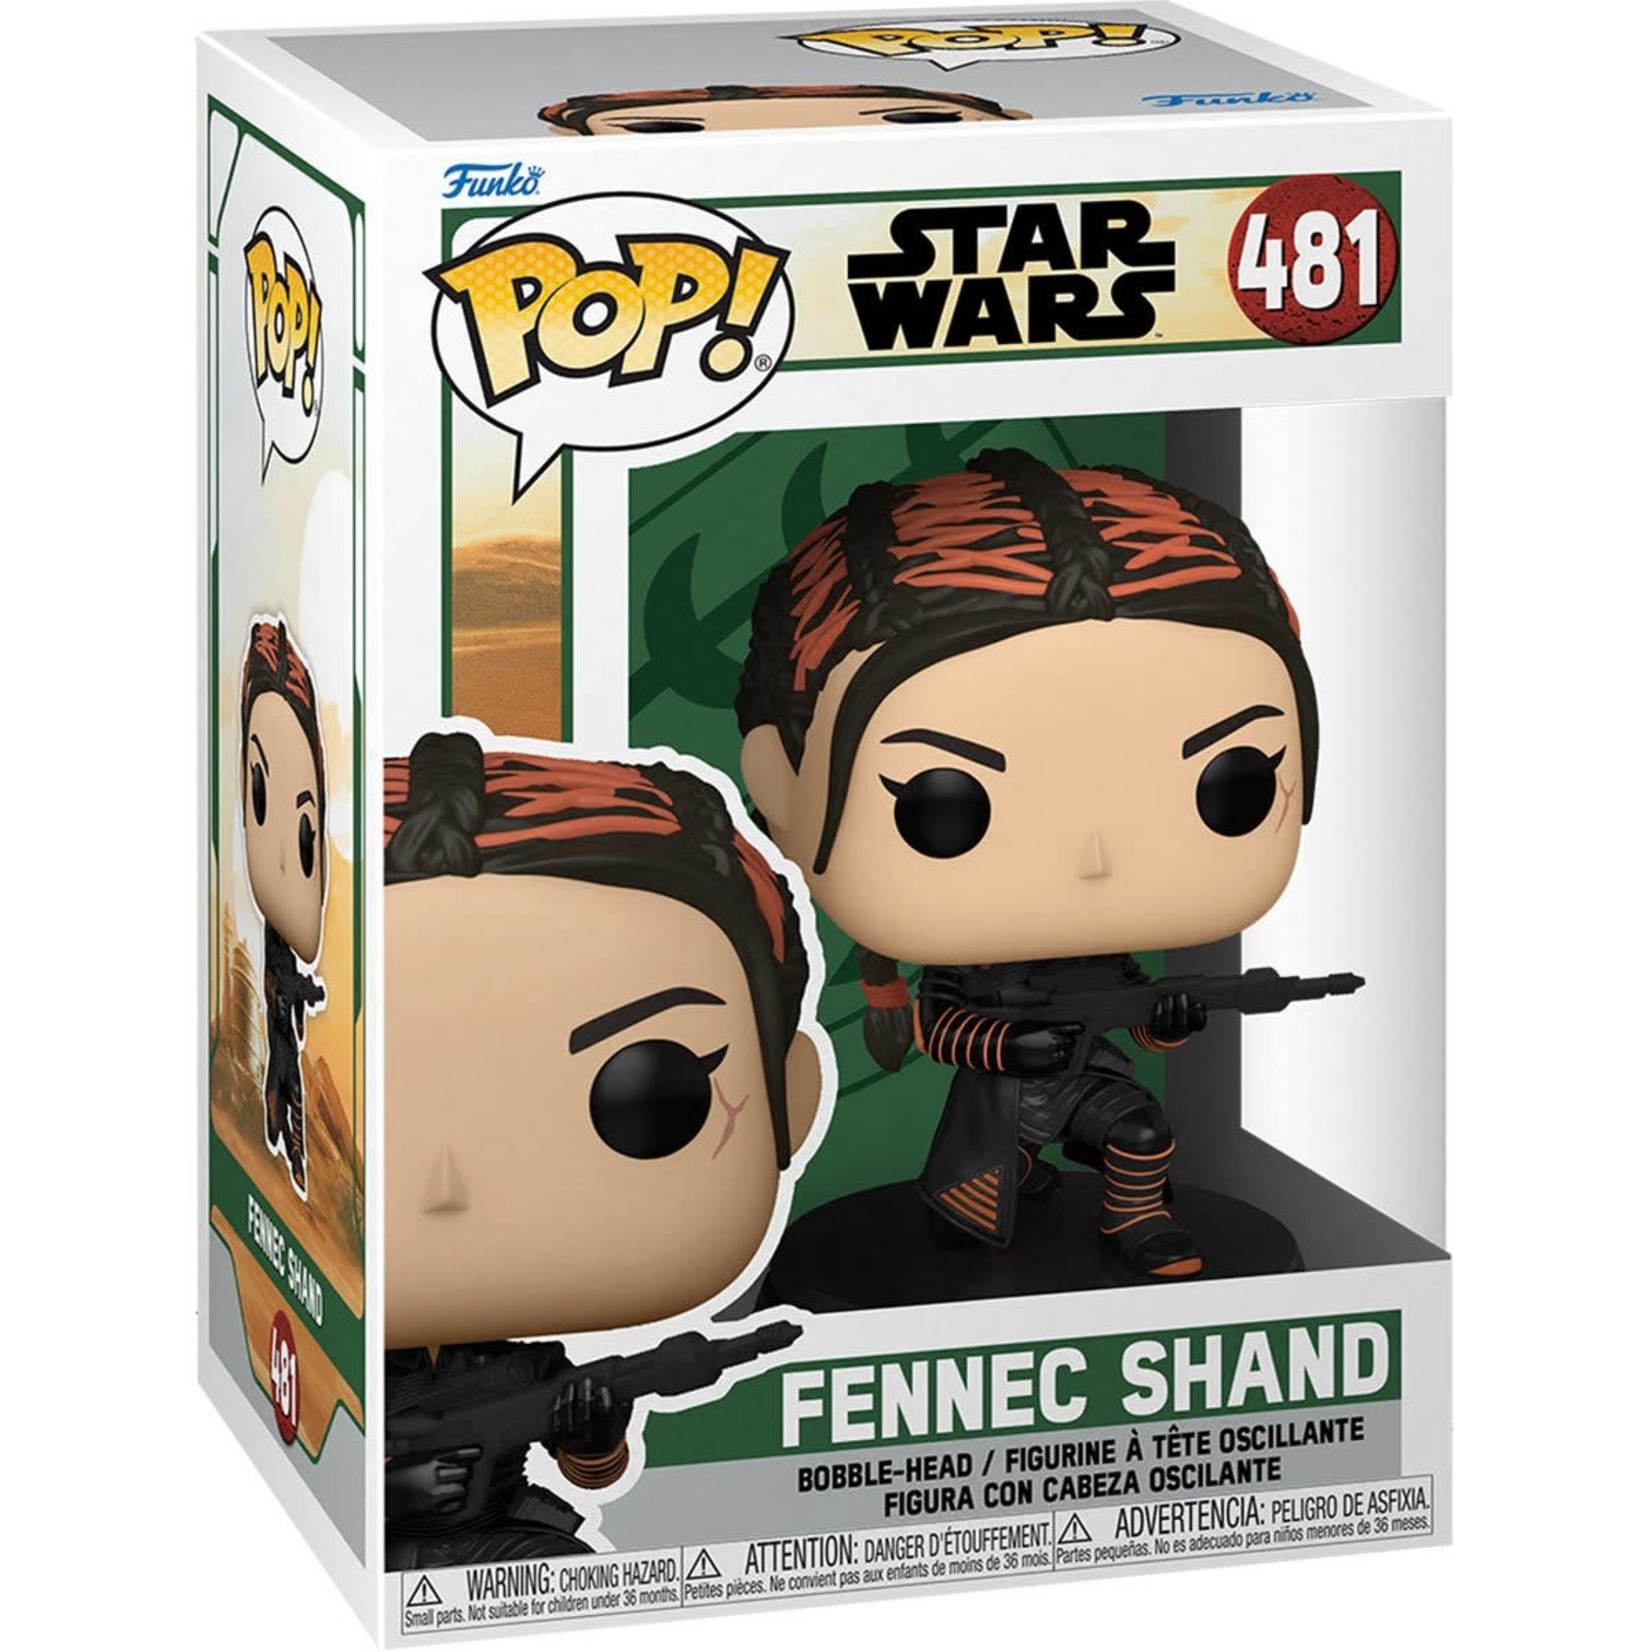 Funko *****Pop! Star Wars 481 - Fennec Shand